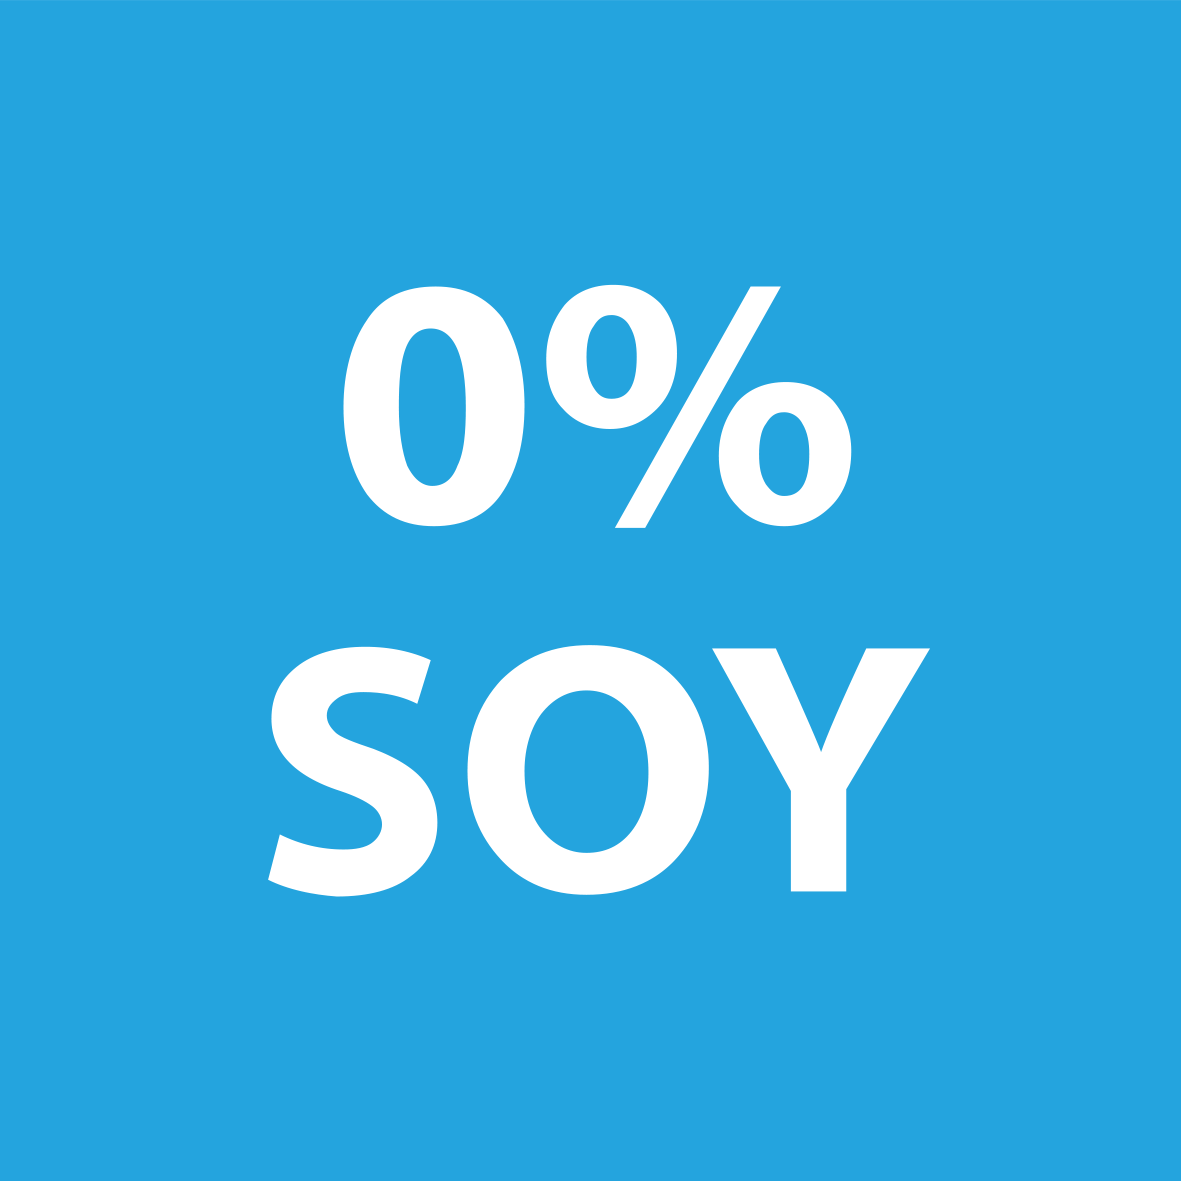 0% soy